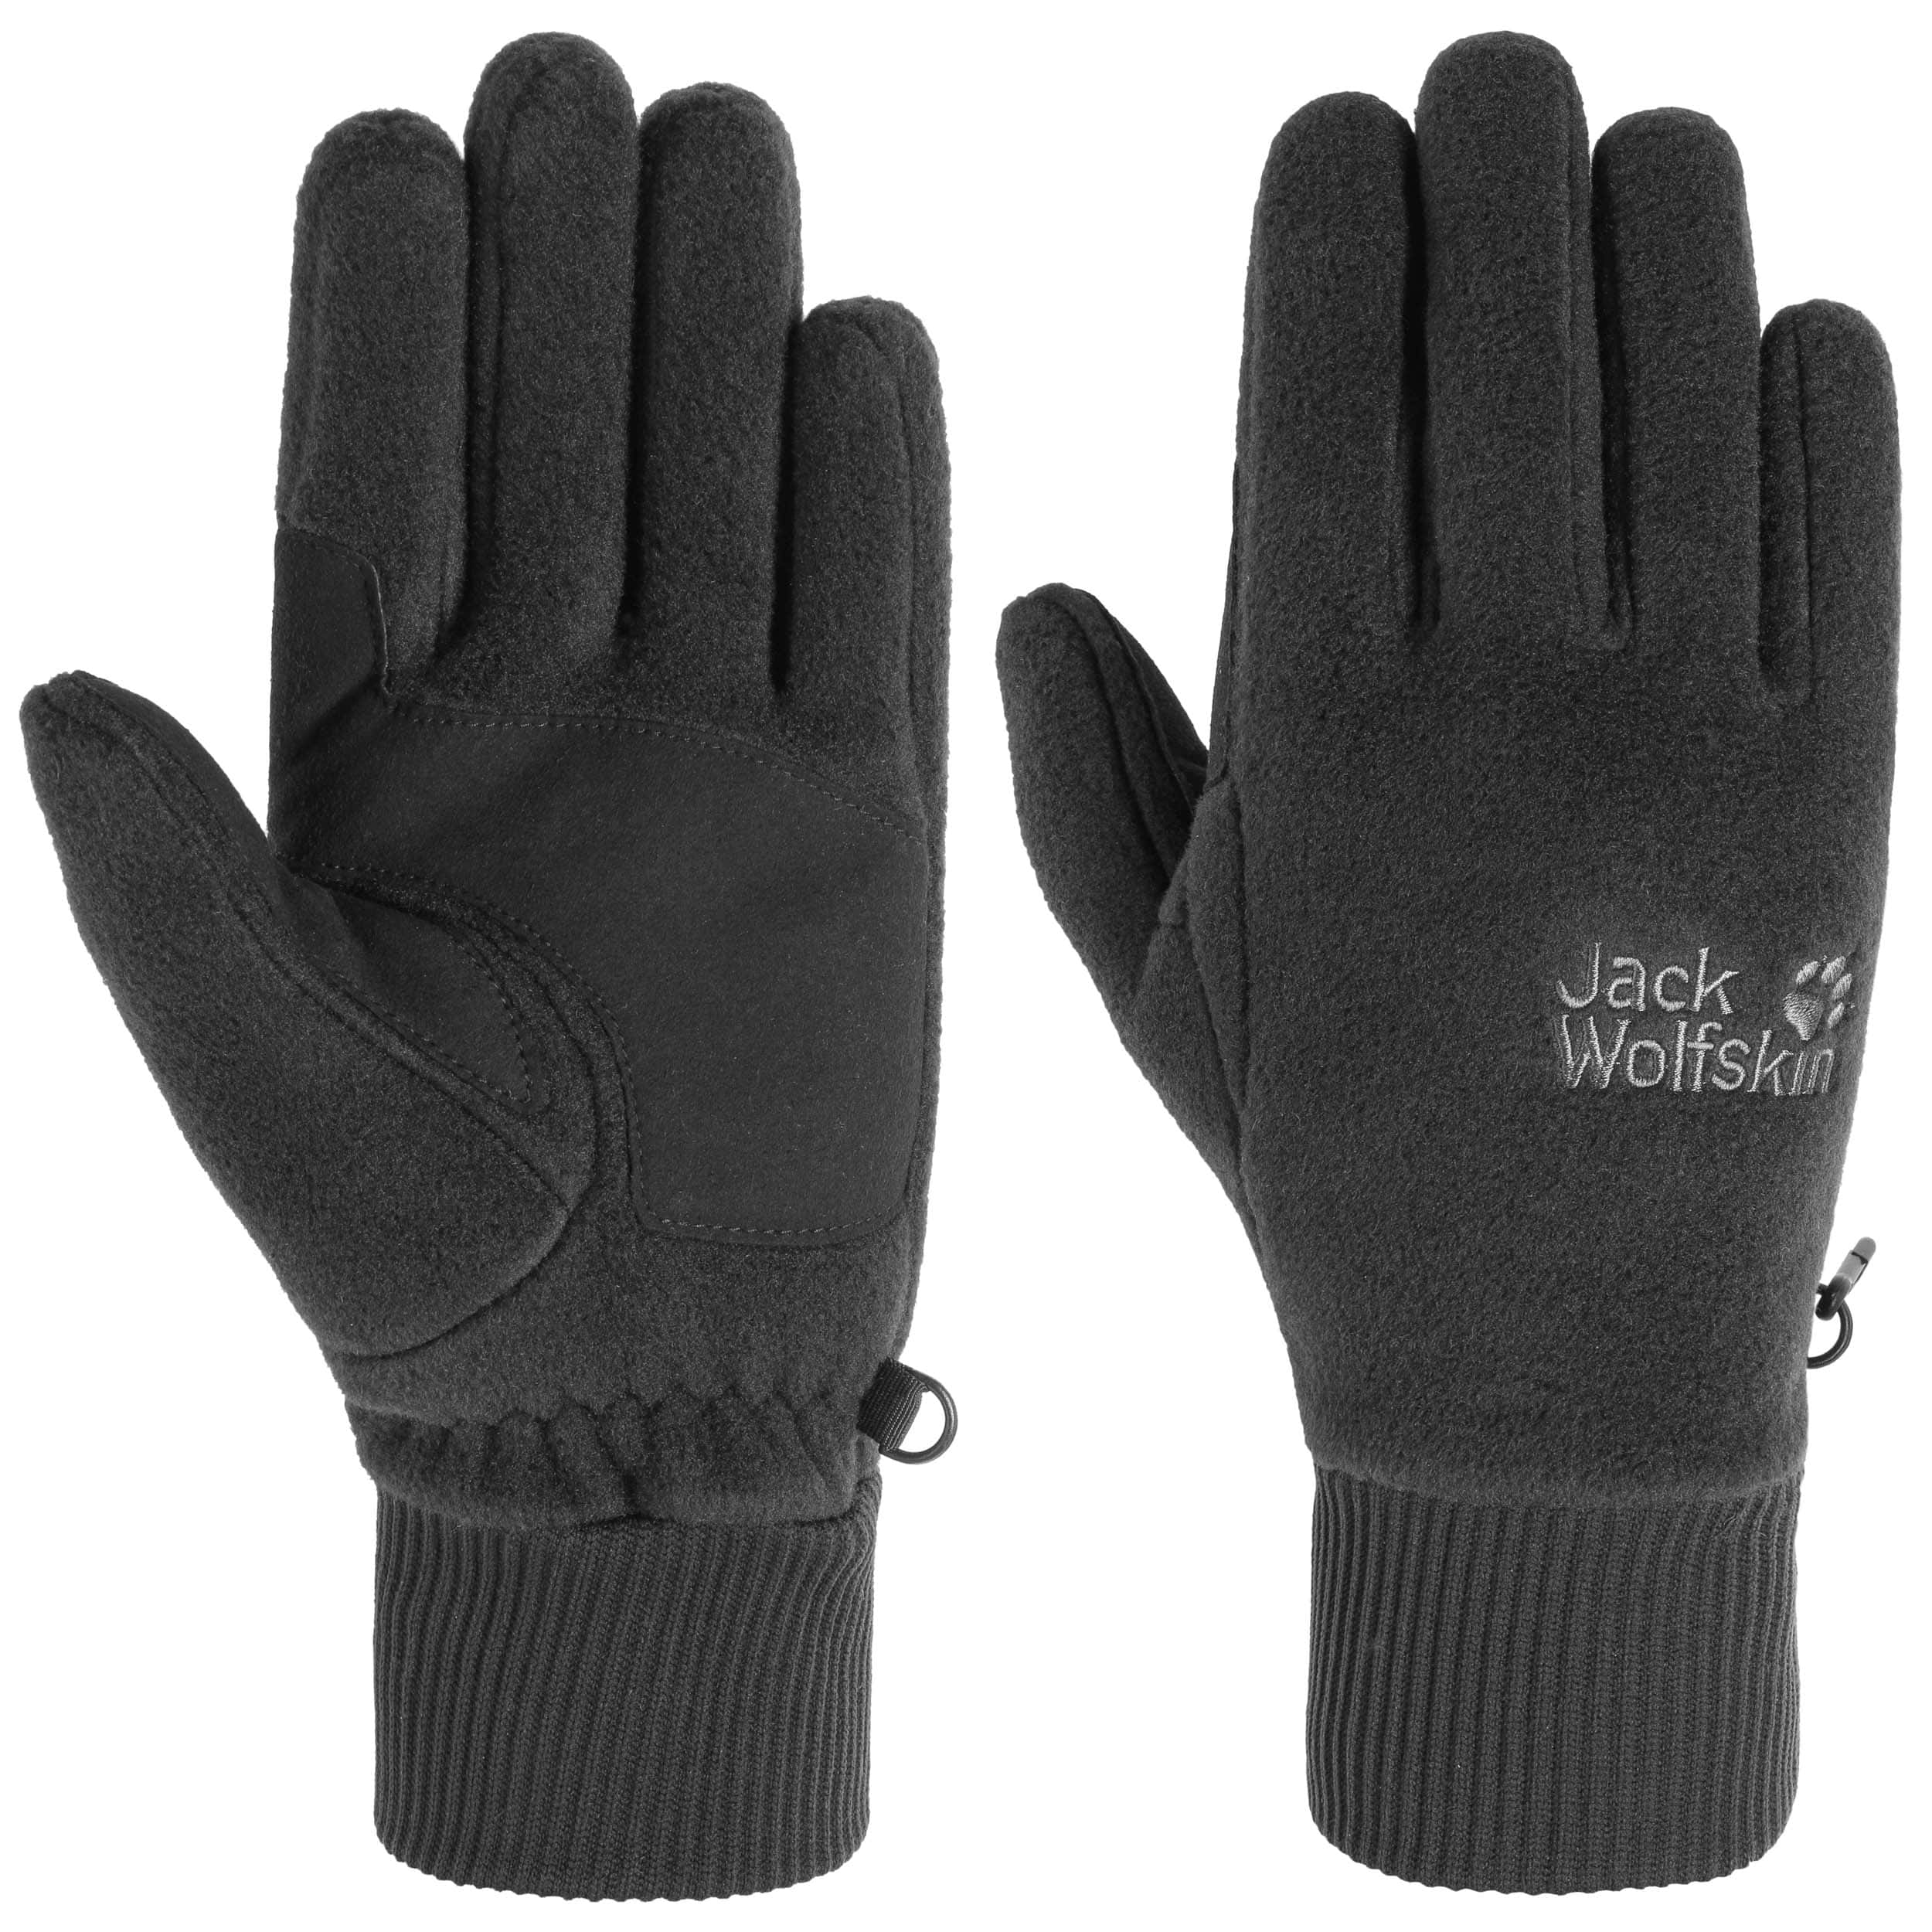 Vertigo Fleece Gloves by € - 37,95 Jack Wolfskin